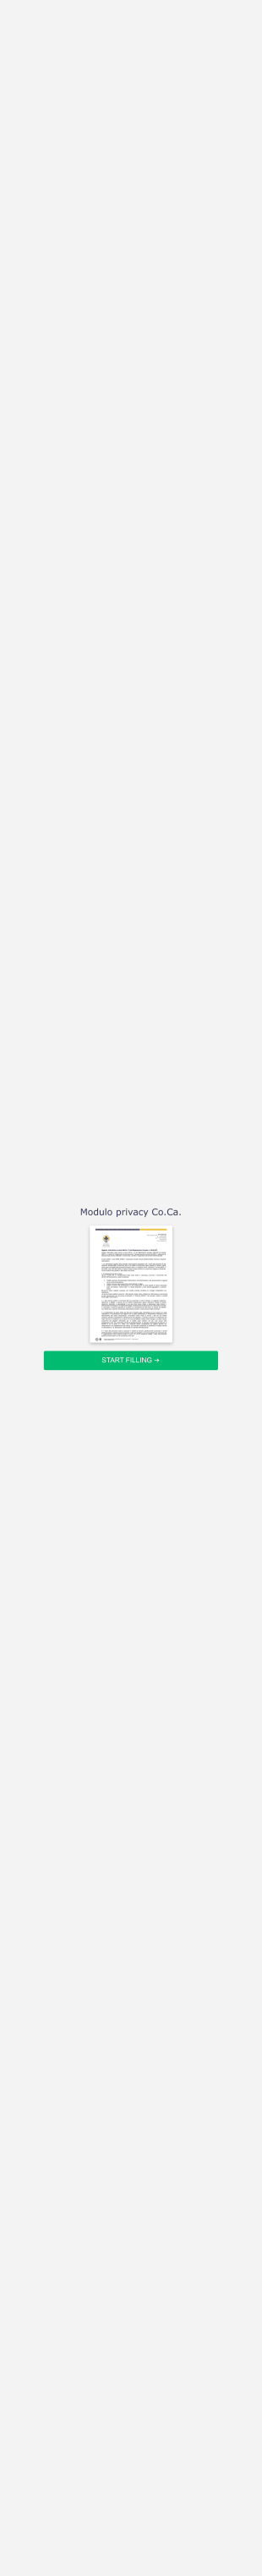 Modulo Privacy AGESCI Form Template